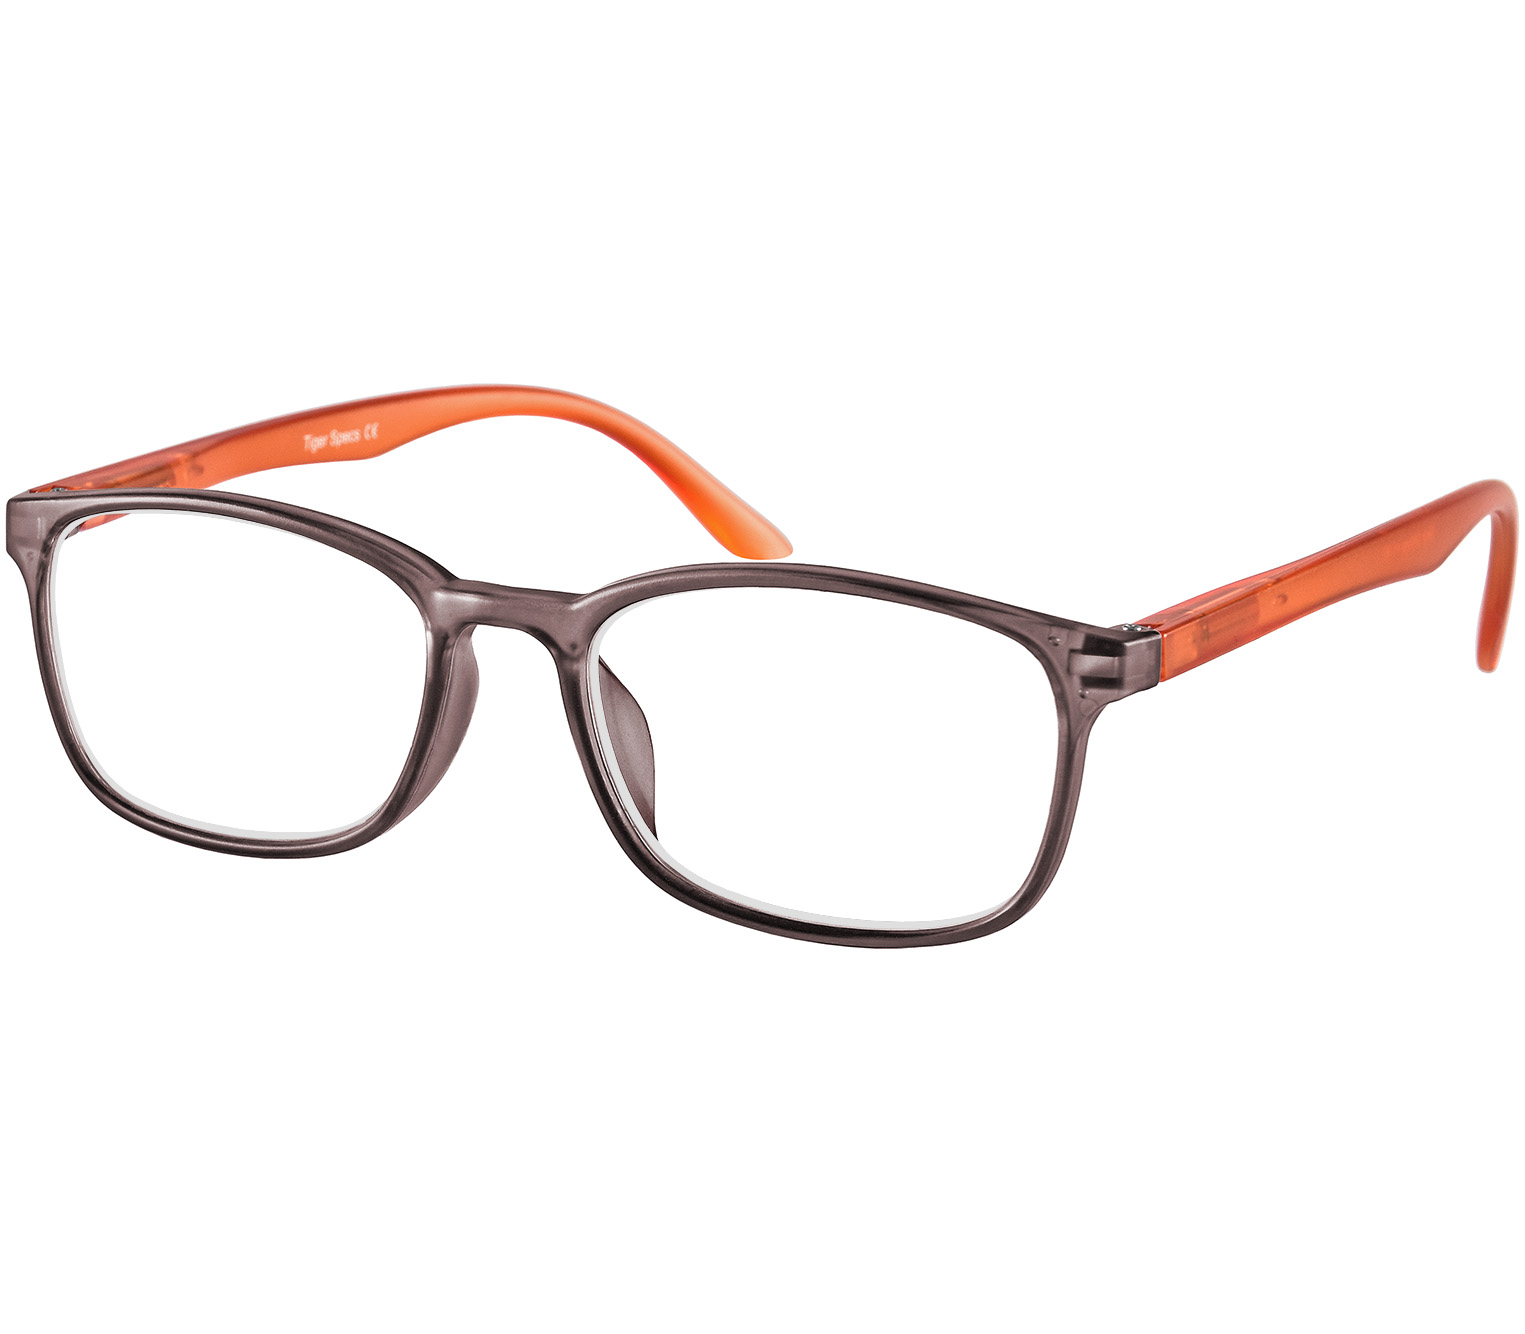 Main Image (Angle) - Tonic (Orange) Classic Reading Glasses